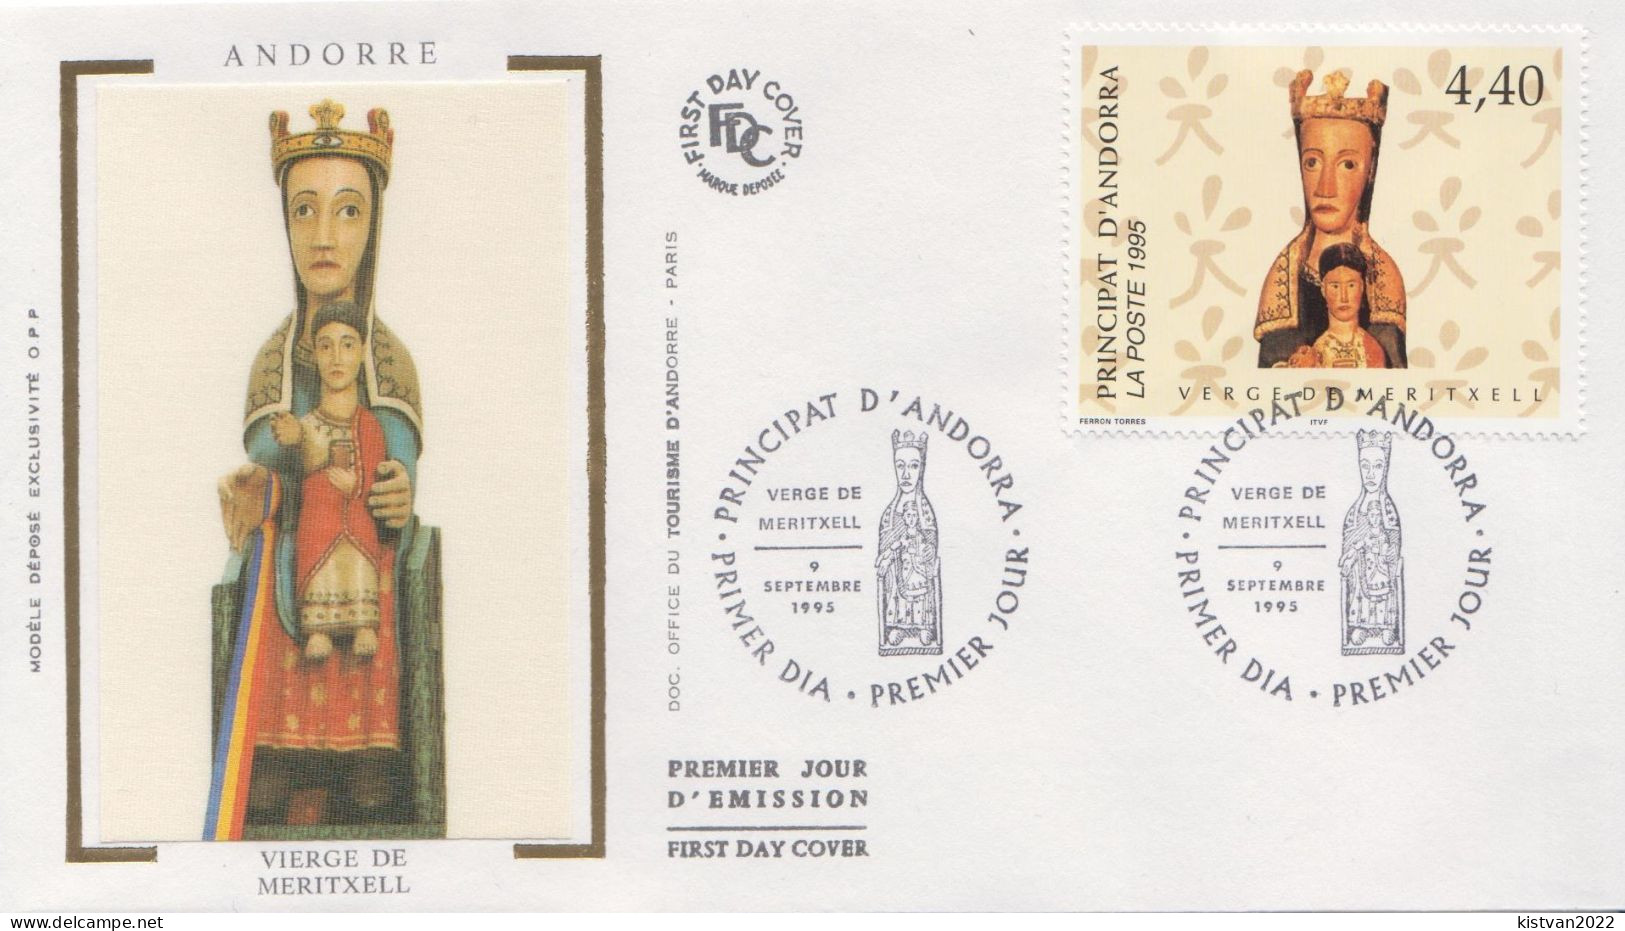 Andorra Stamp On Silk FDC - Religious